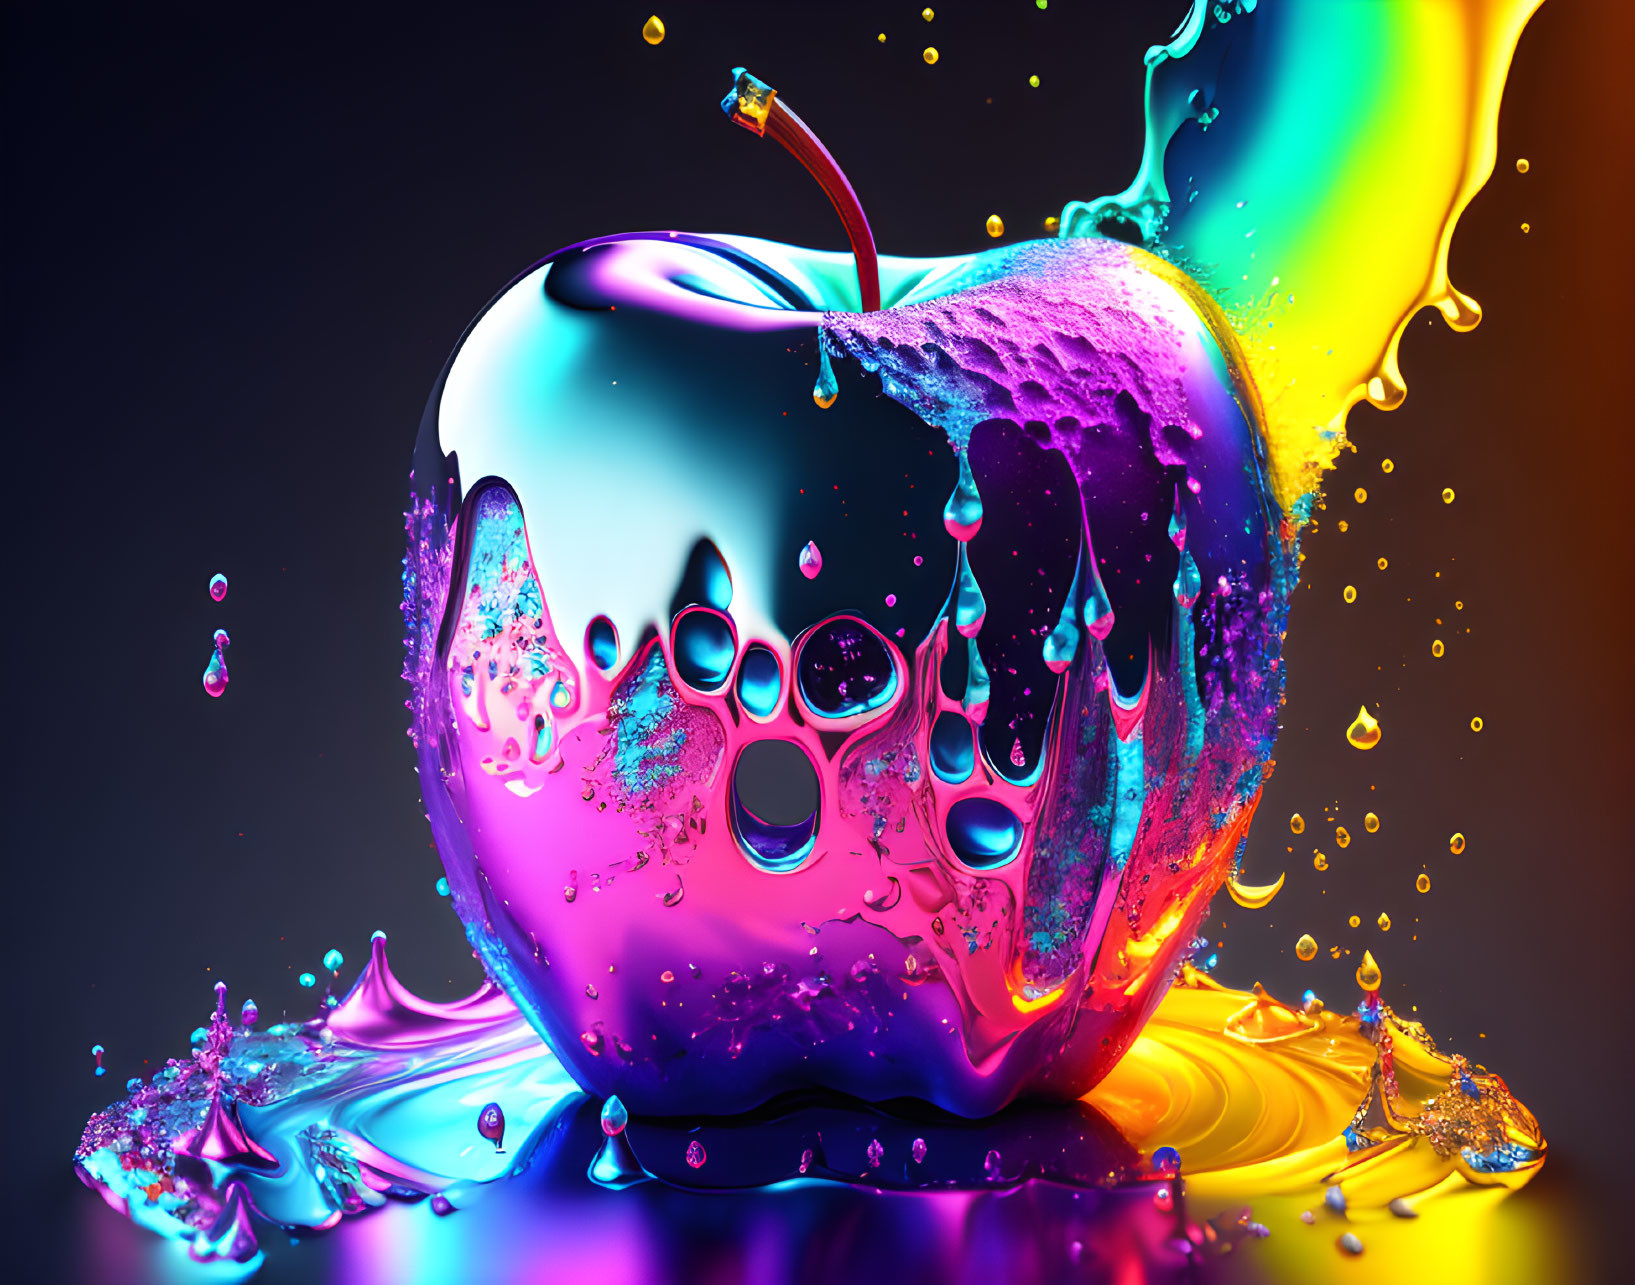 Colorful 3D apple with liquid splash on dark background